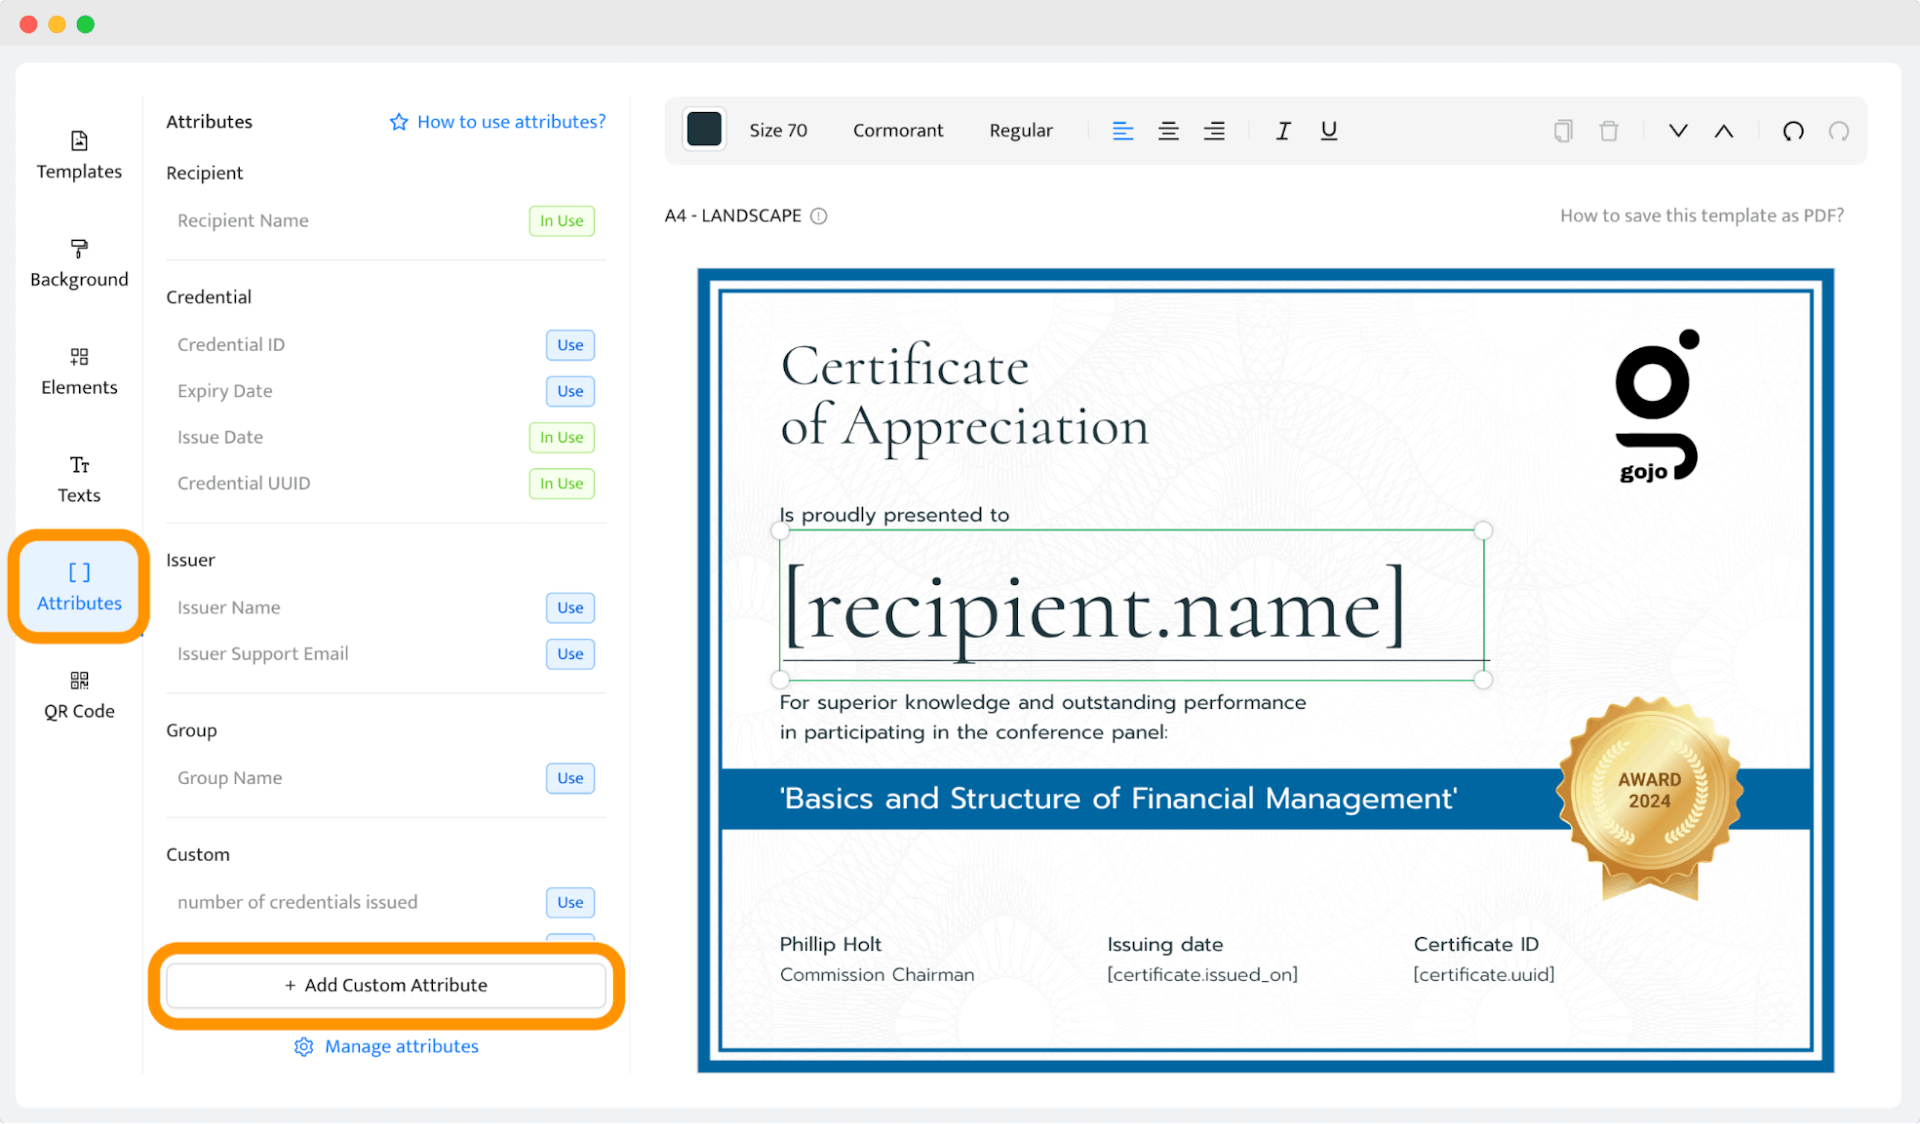 Adding custom attribute to make certificate of appreciation template.